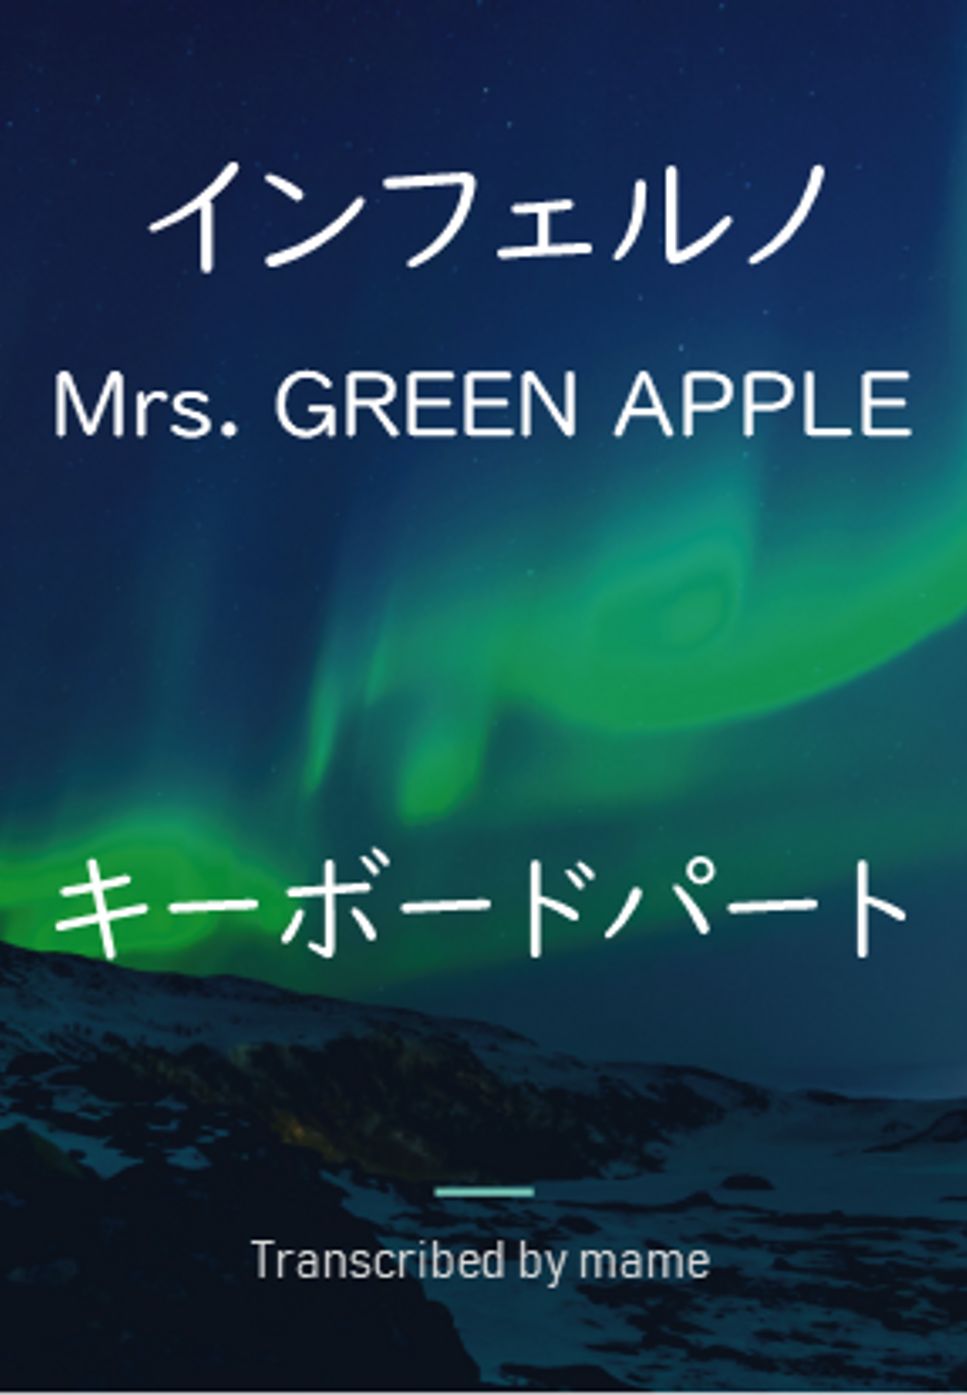 Mrs. GREEN APPLE - インフェルノ (キーボードパート) by mame